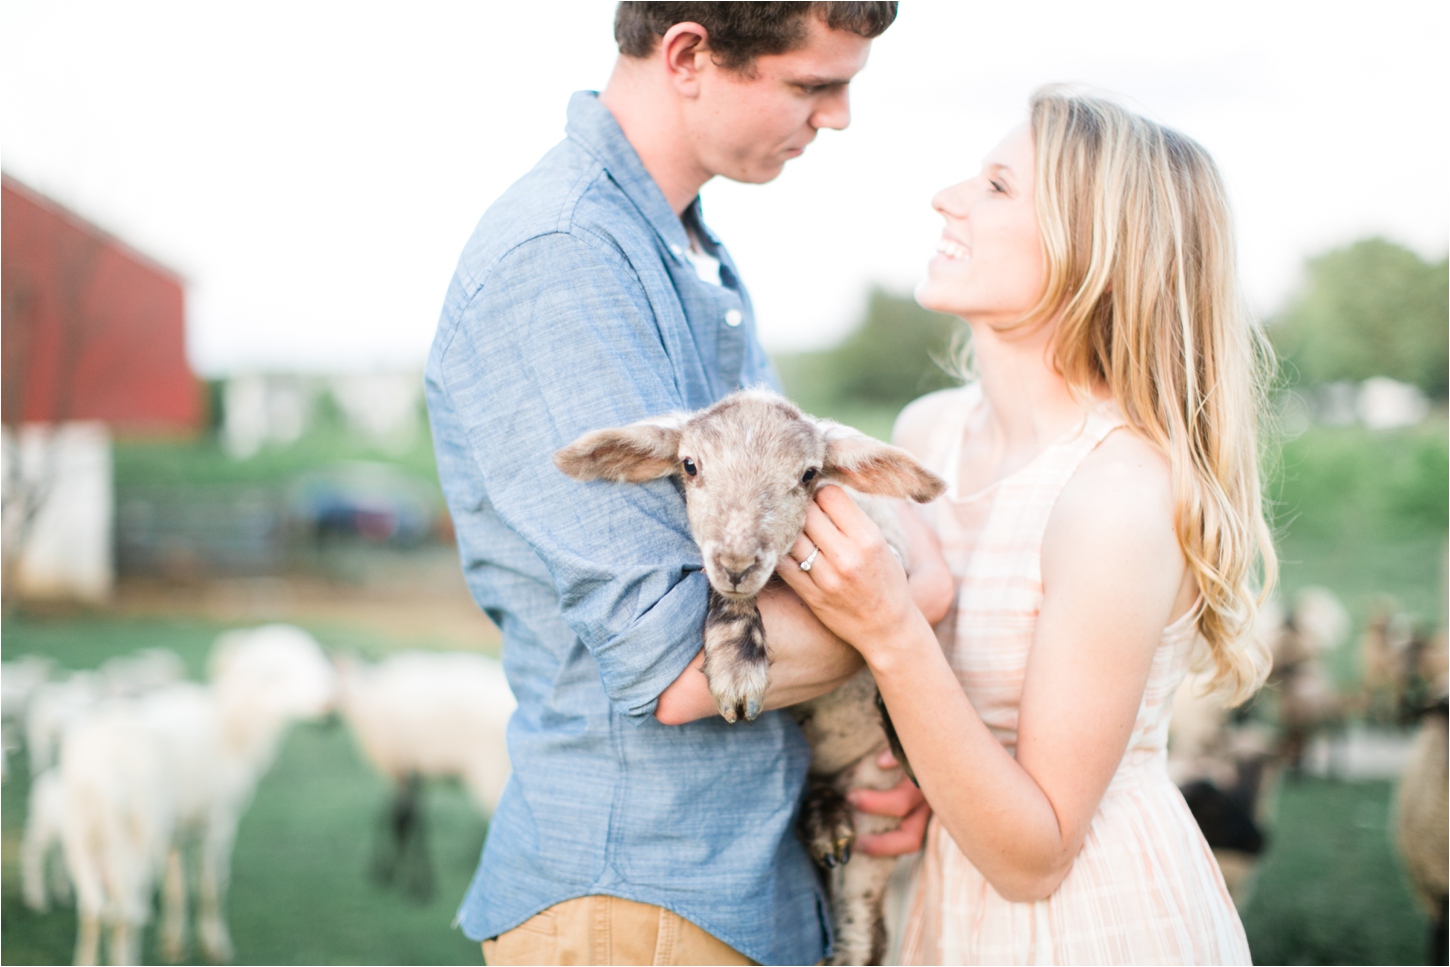 Farm and Sheep Engagement Session Inspiration by Pennsylvania Wedding Photographer Brianna Wilbur